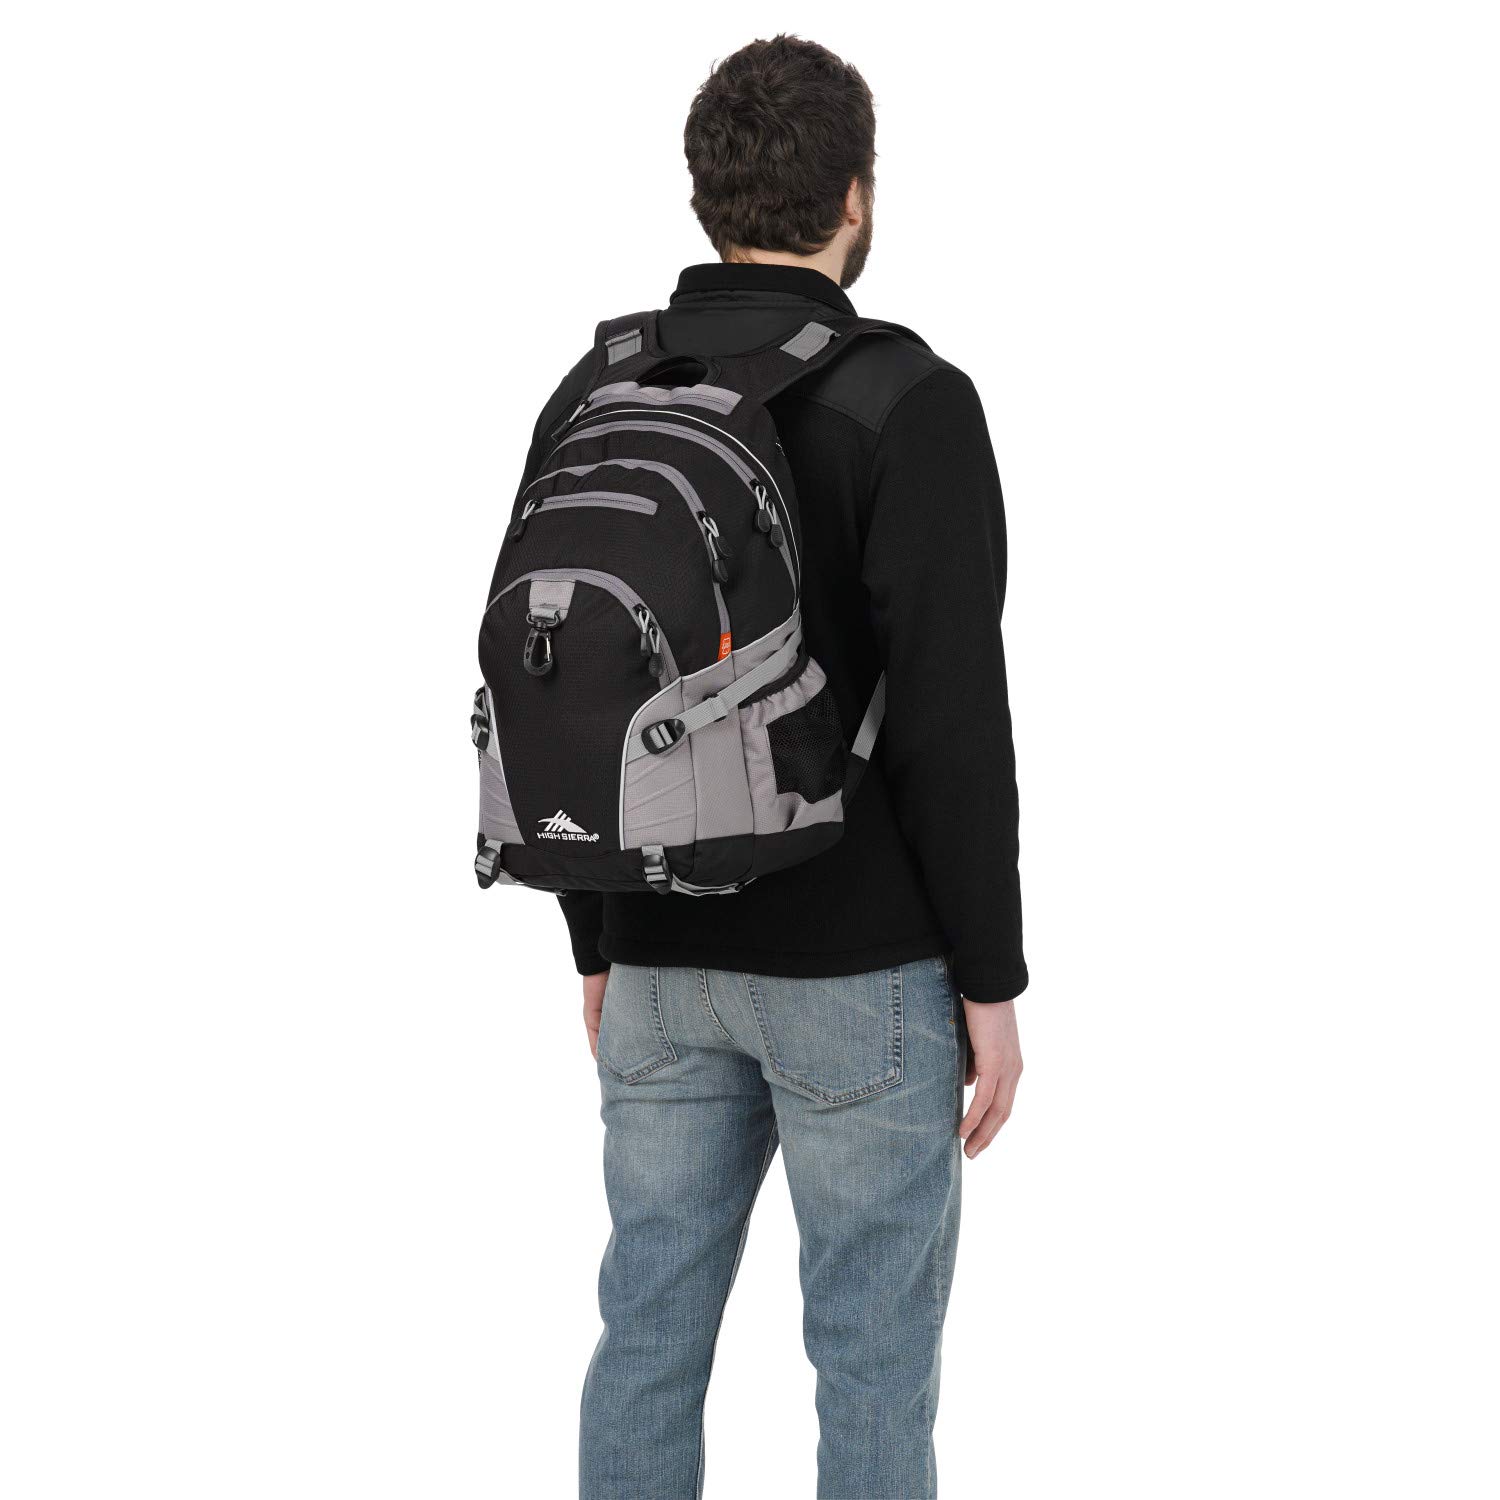 High Sierra Loop Backpack, Travel, or Work Bookbag with tablet sleeve, One Size, Black/Charcoal